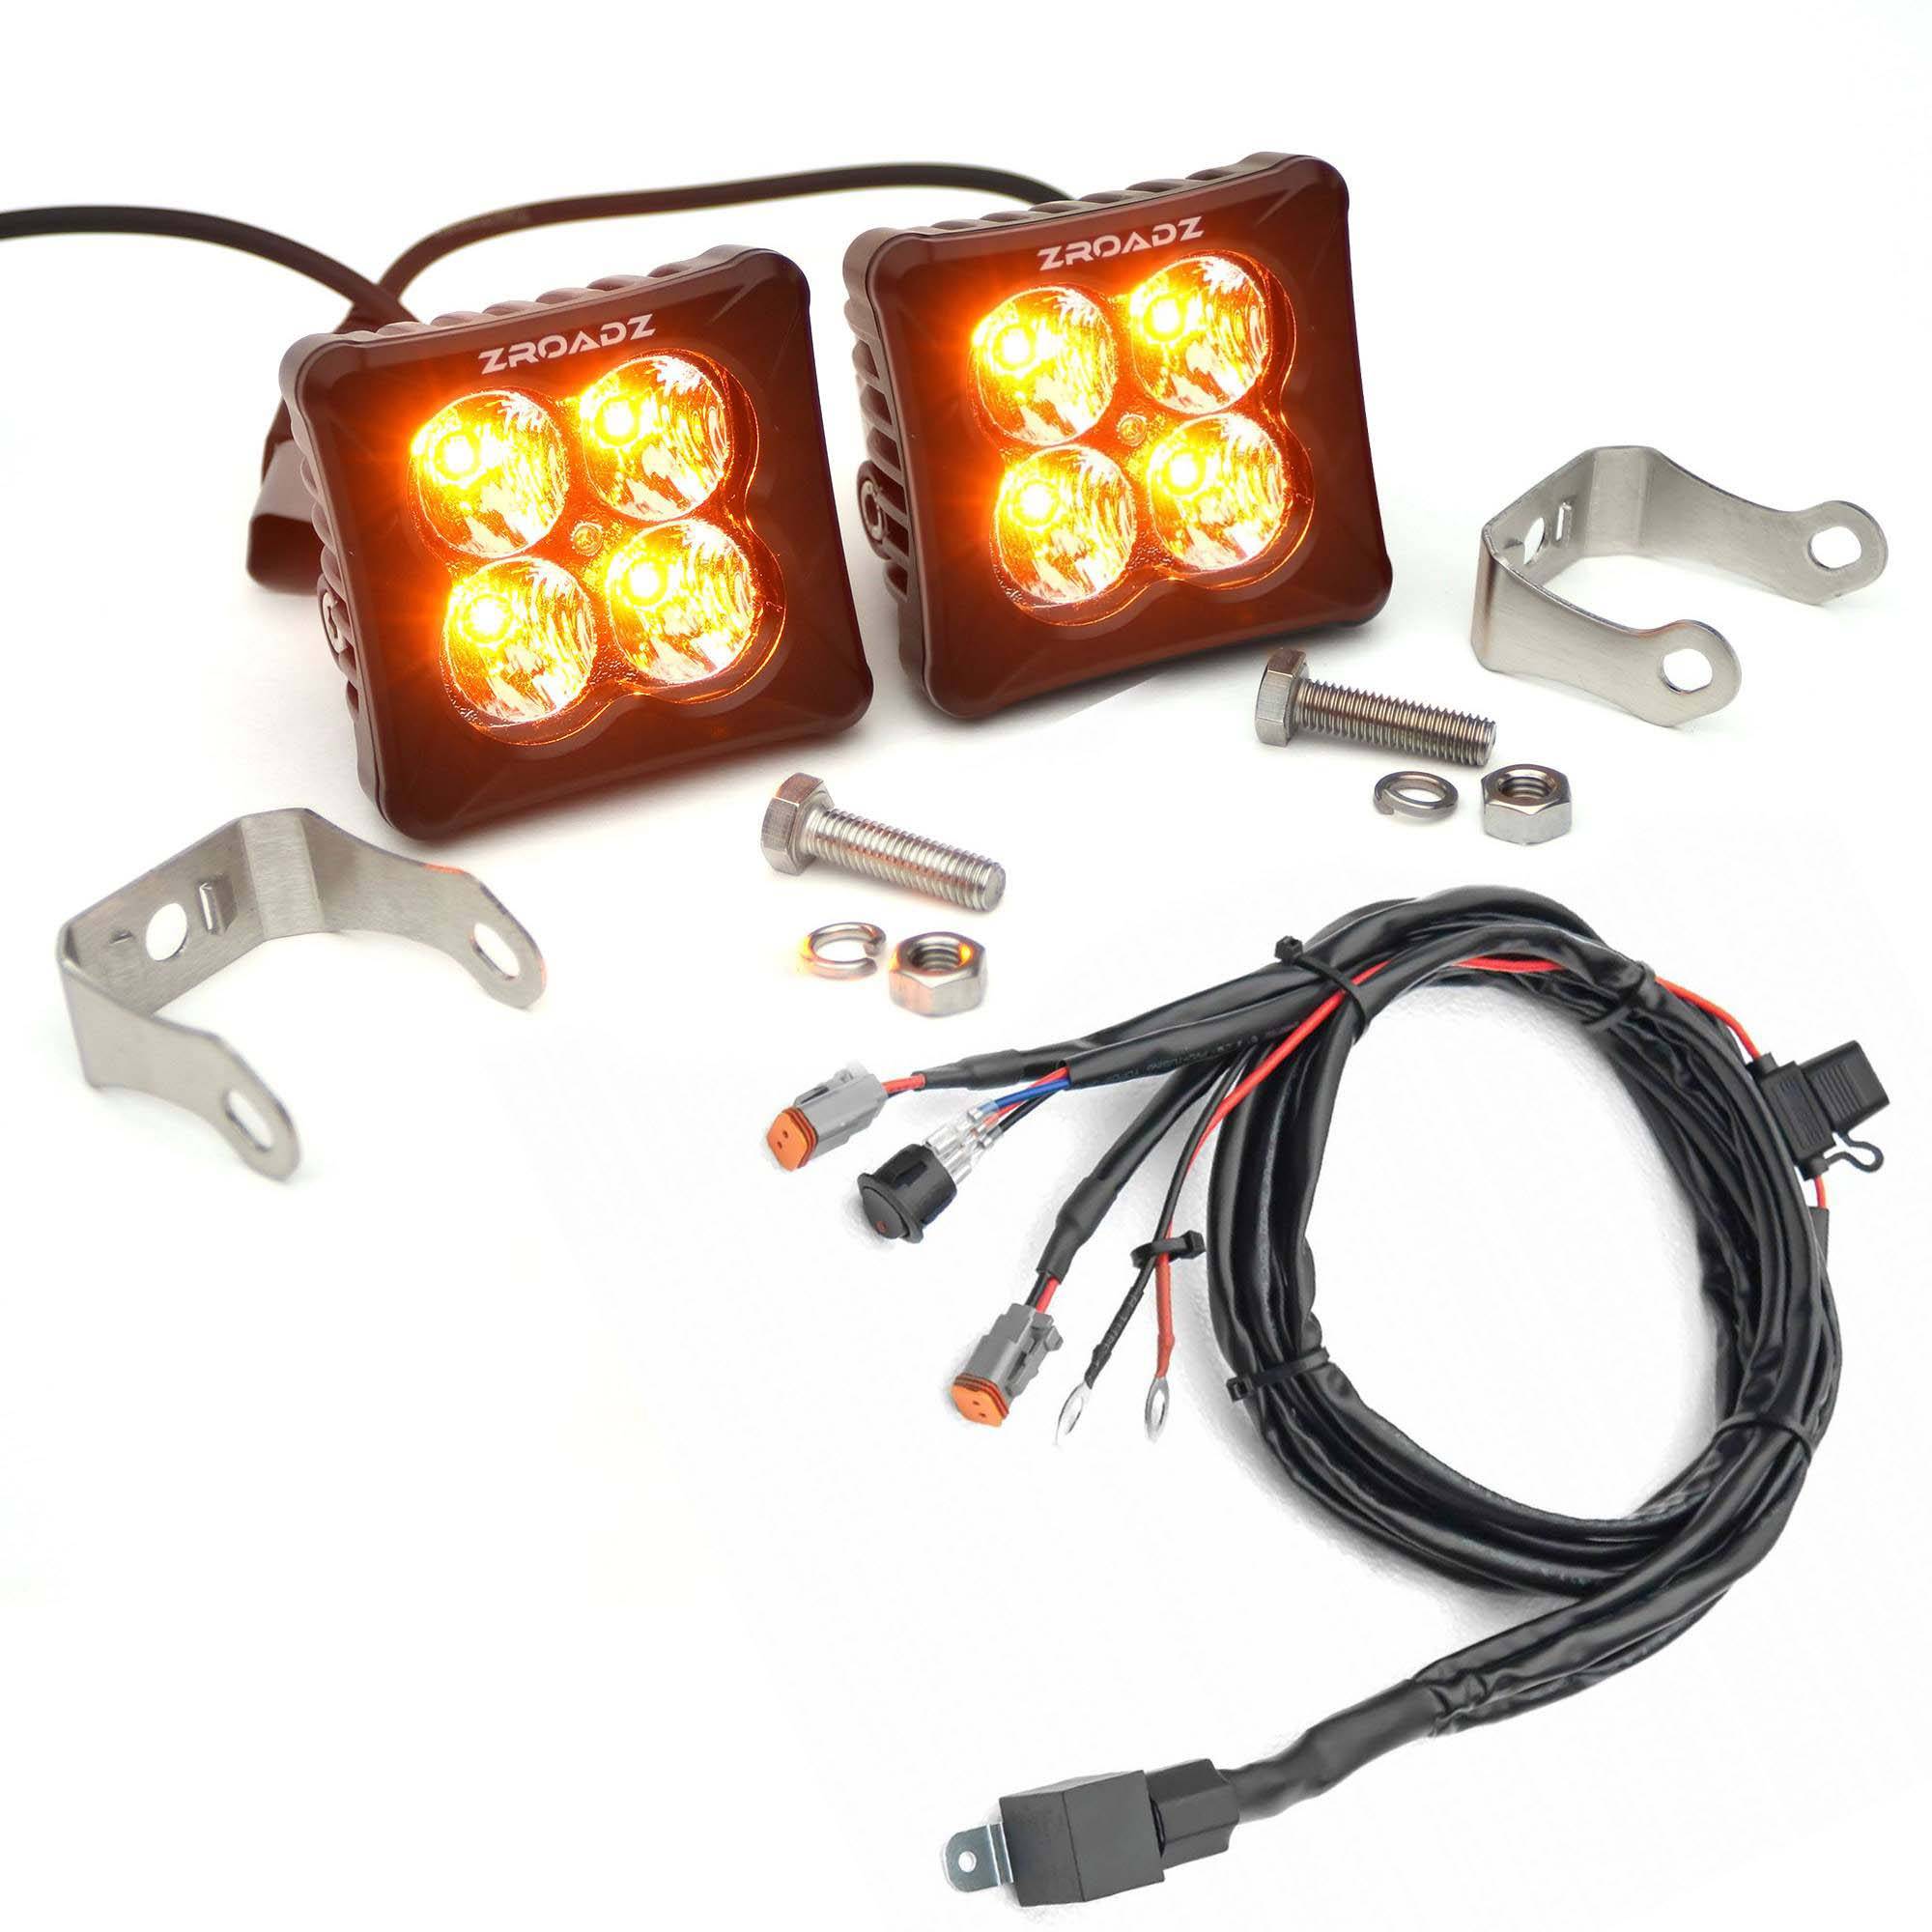 ZROADZ OFF ROAD PRODUCTS - 3 inch ZROADZ LED Light Pod Kit, G2 Series, Amber, Flood Beam, 2 Piece Kit With Wiring Harness - PN #Z30BC12W-D3A-K